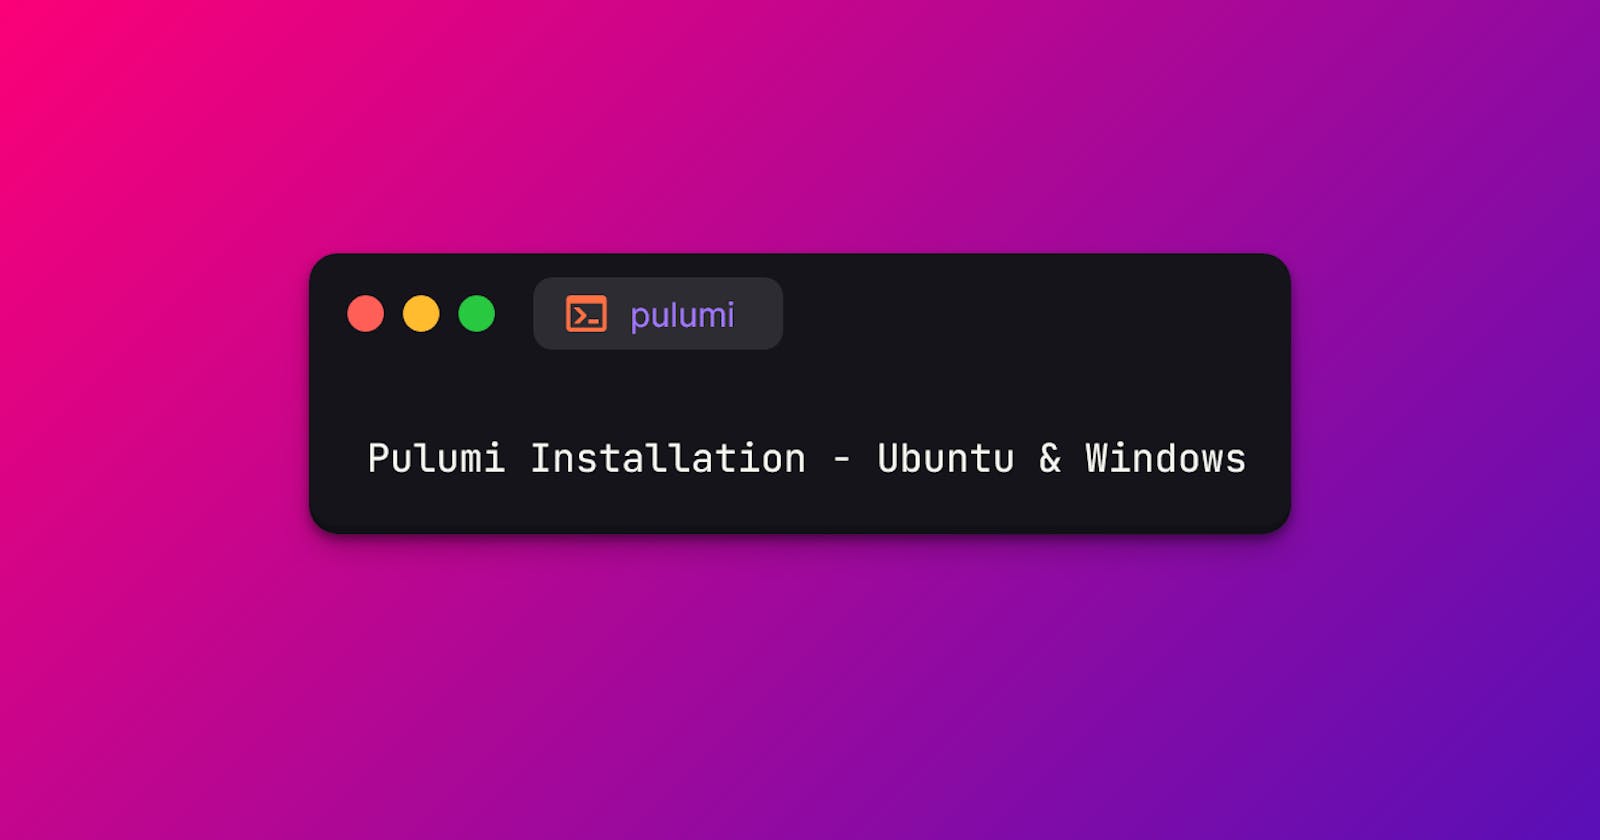 Pulumi Installation - Ubuntu & Windows